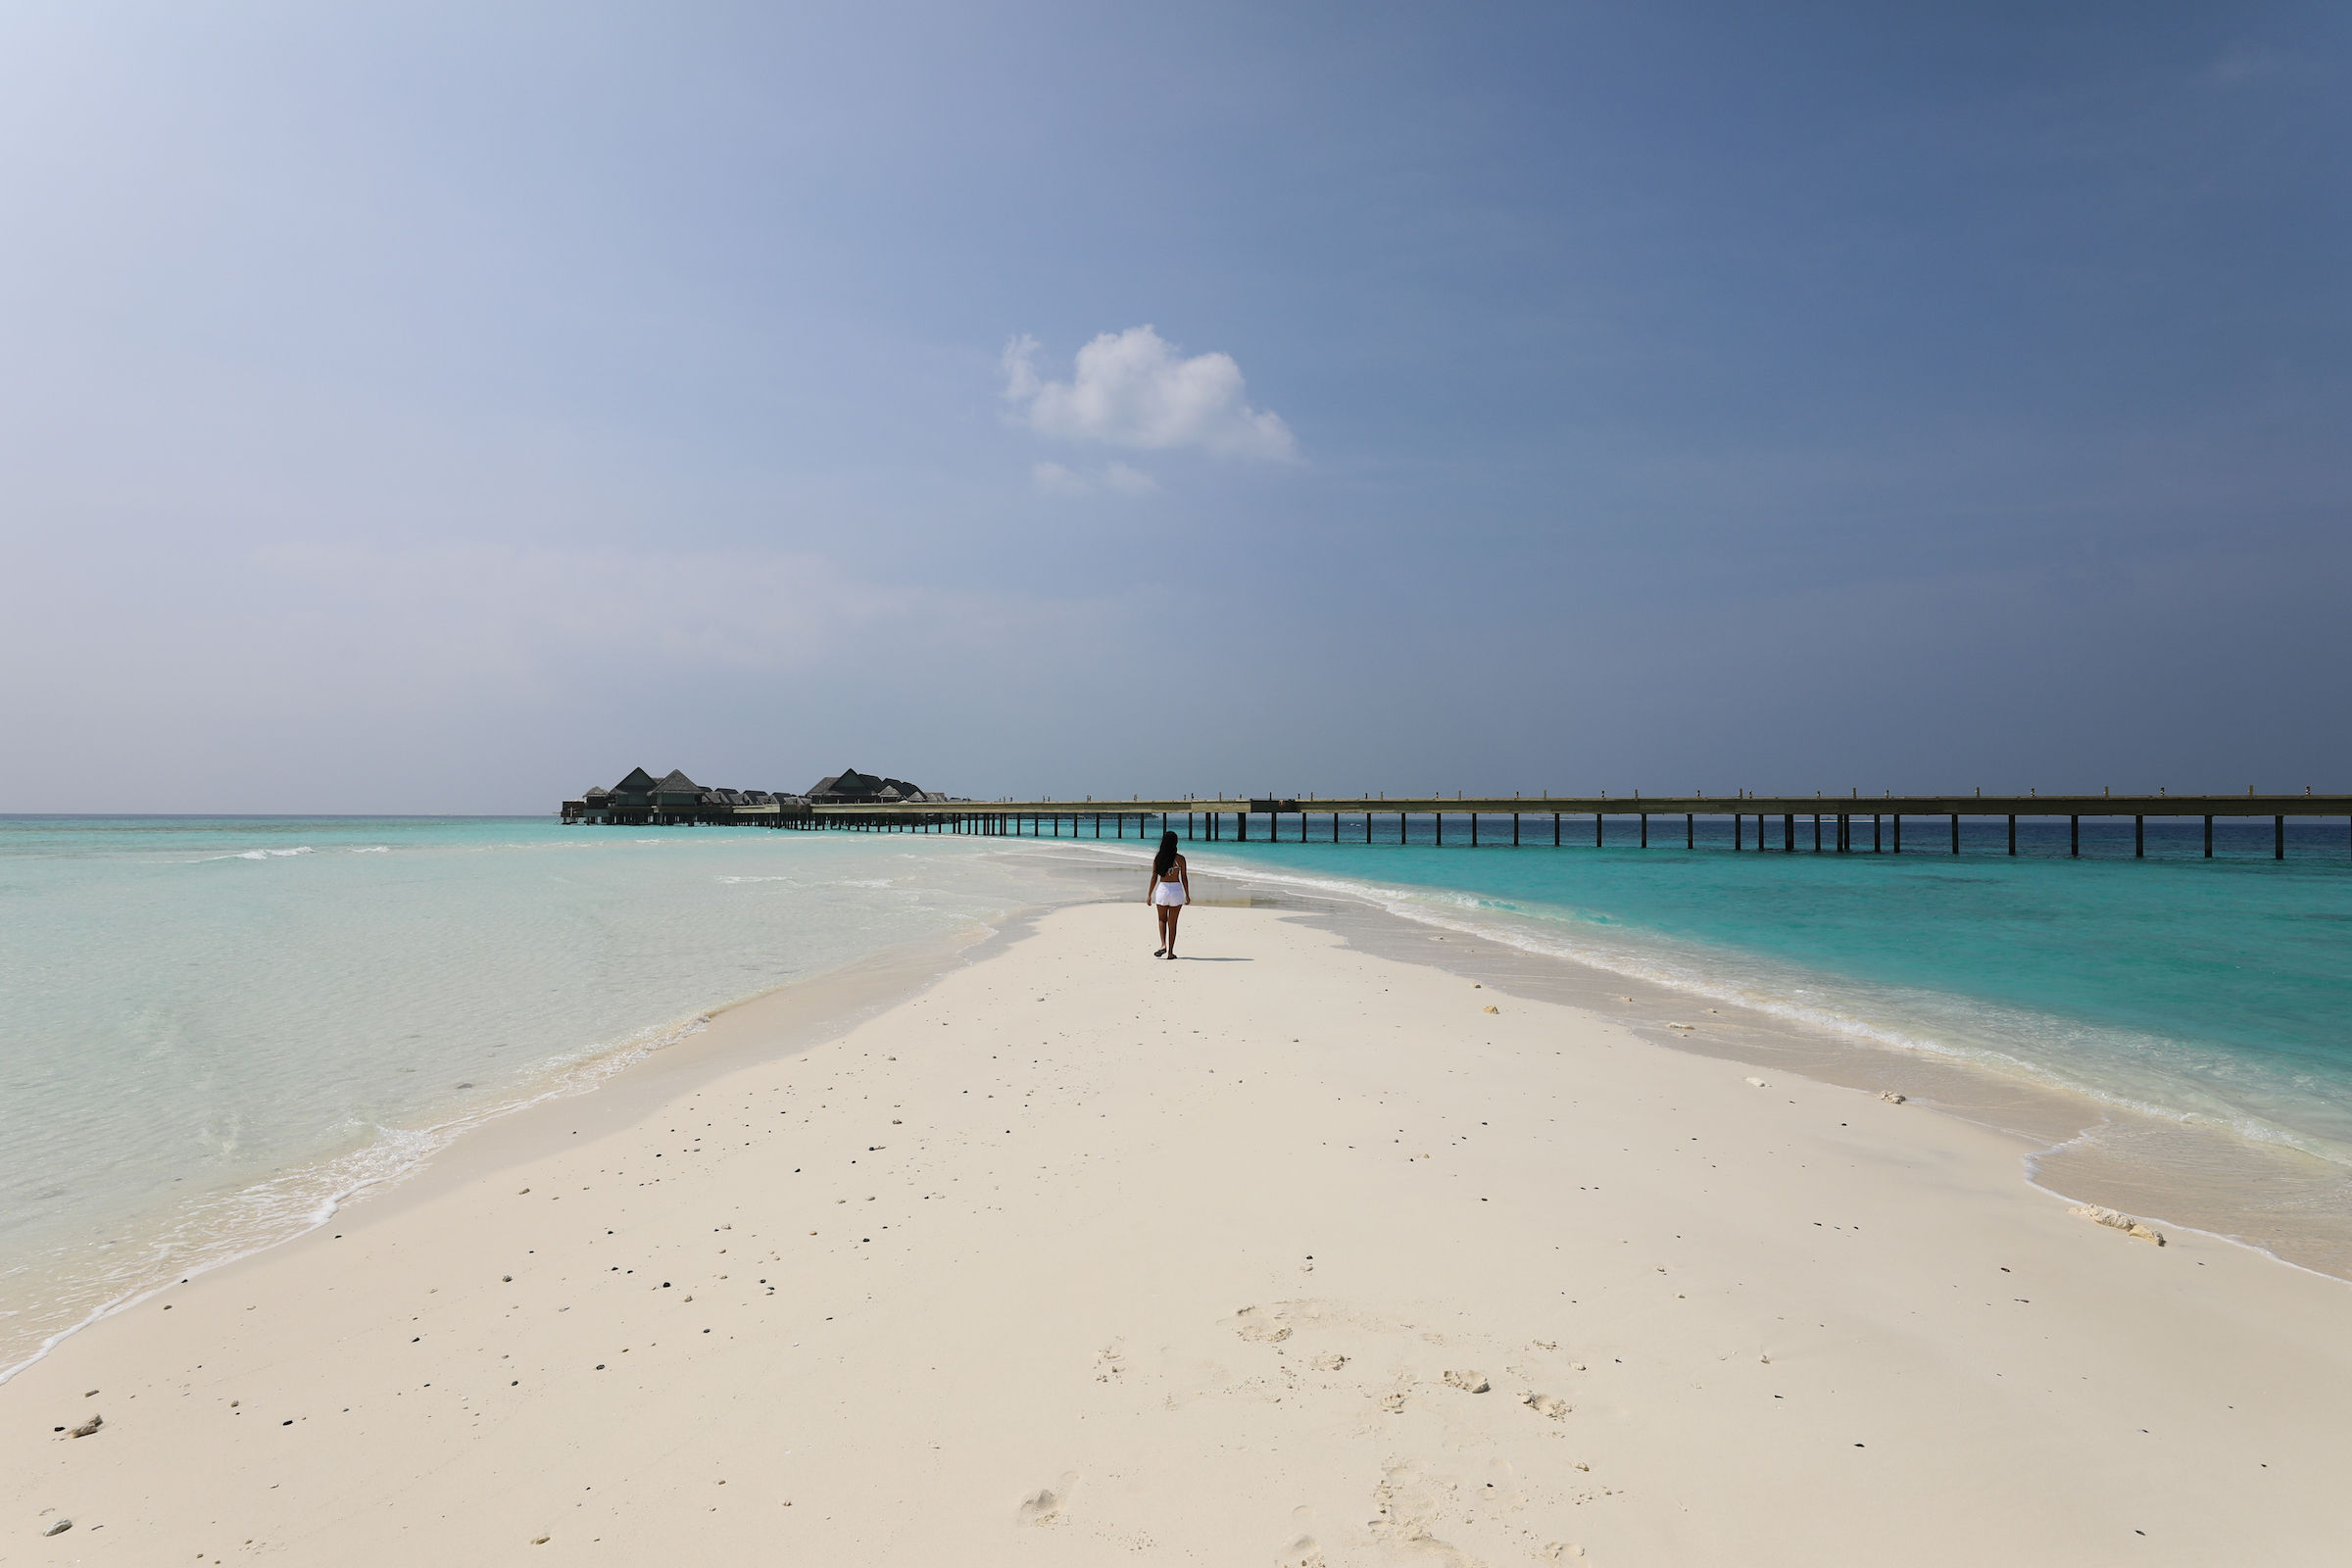 Jet-setting to Joali for a luxurious Maldivian getaway with Iroshini Chua